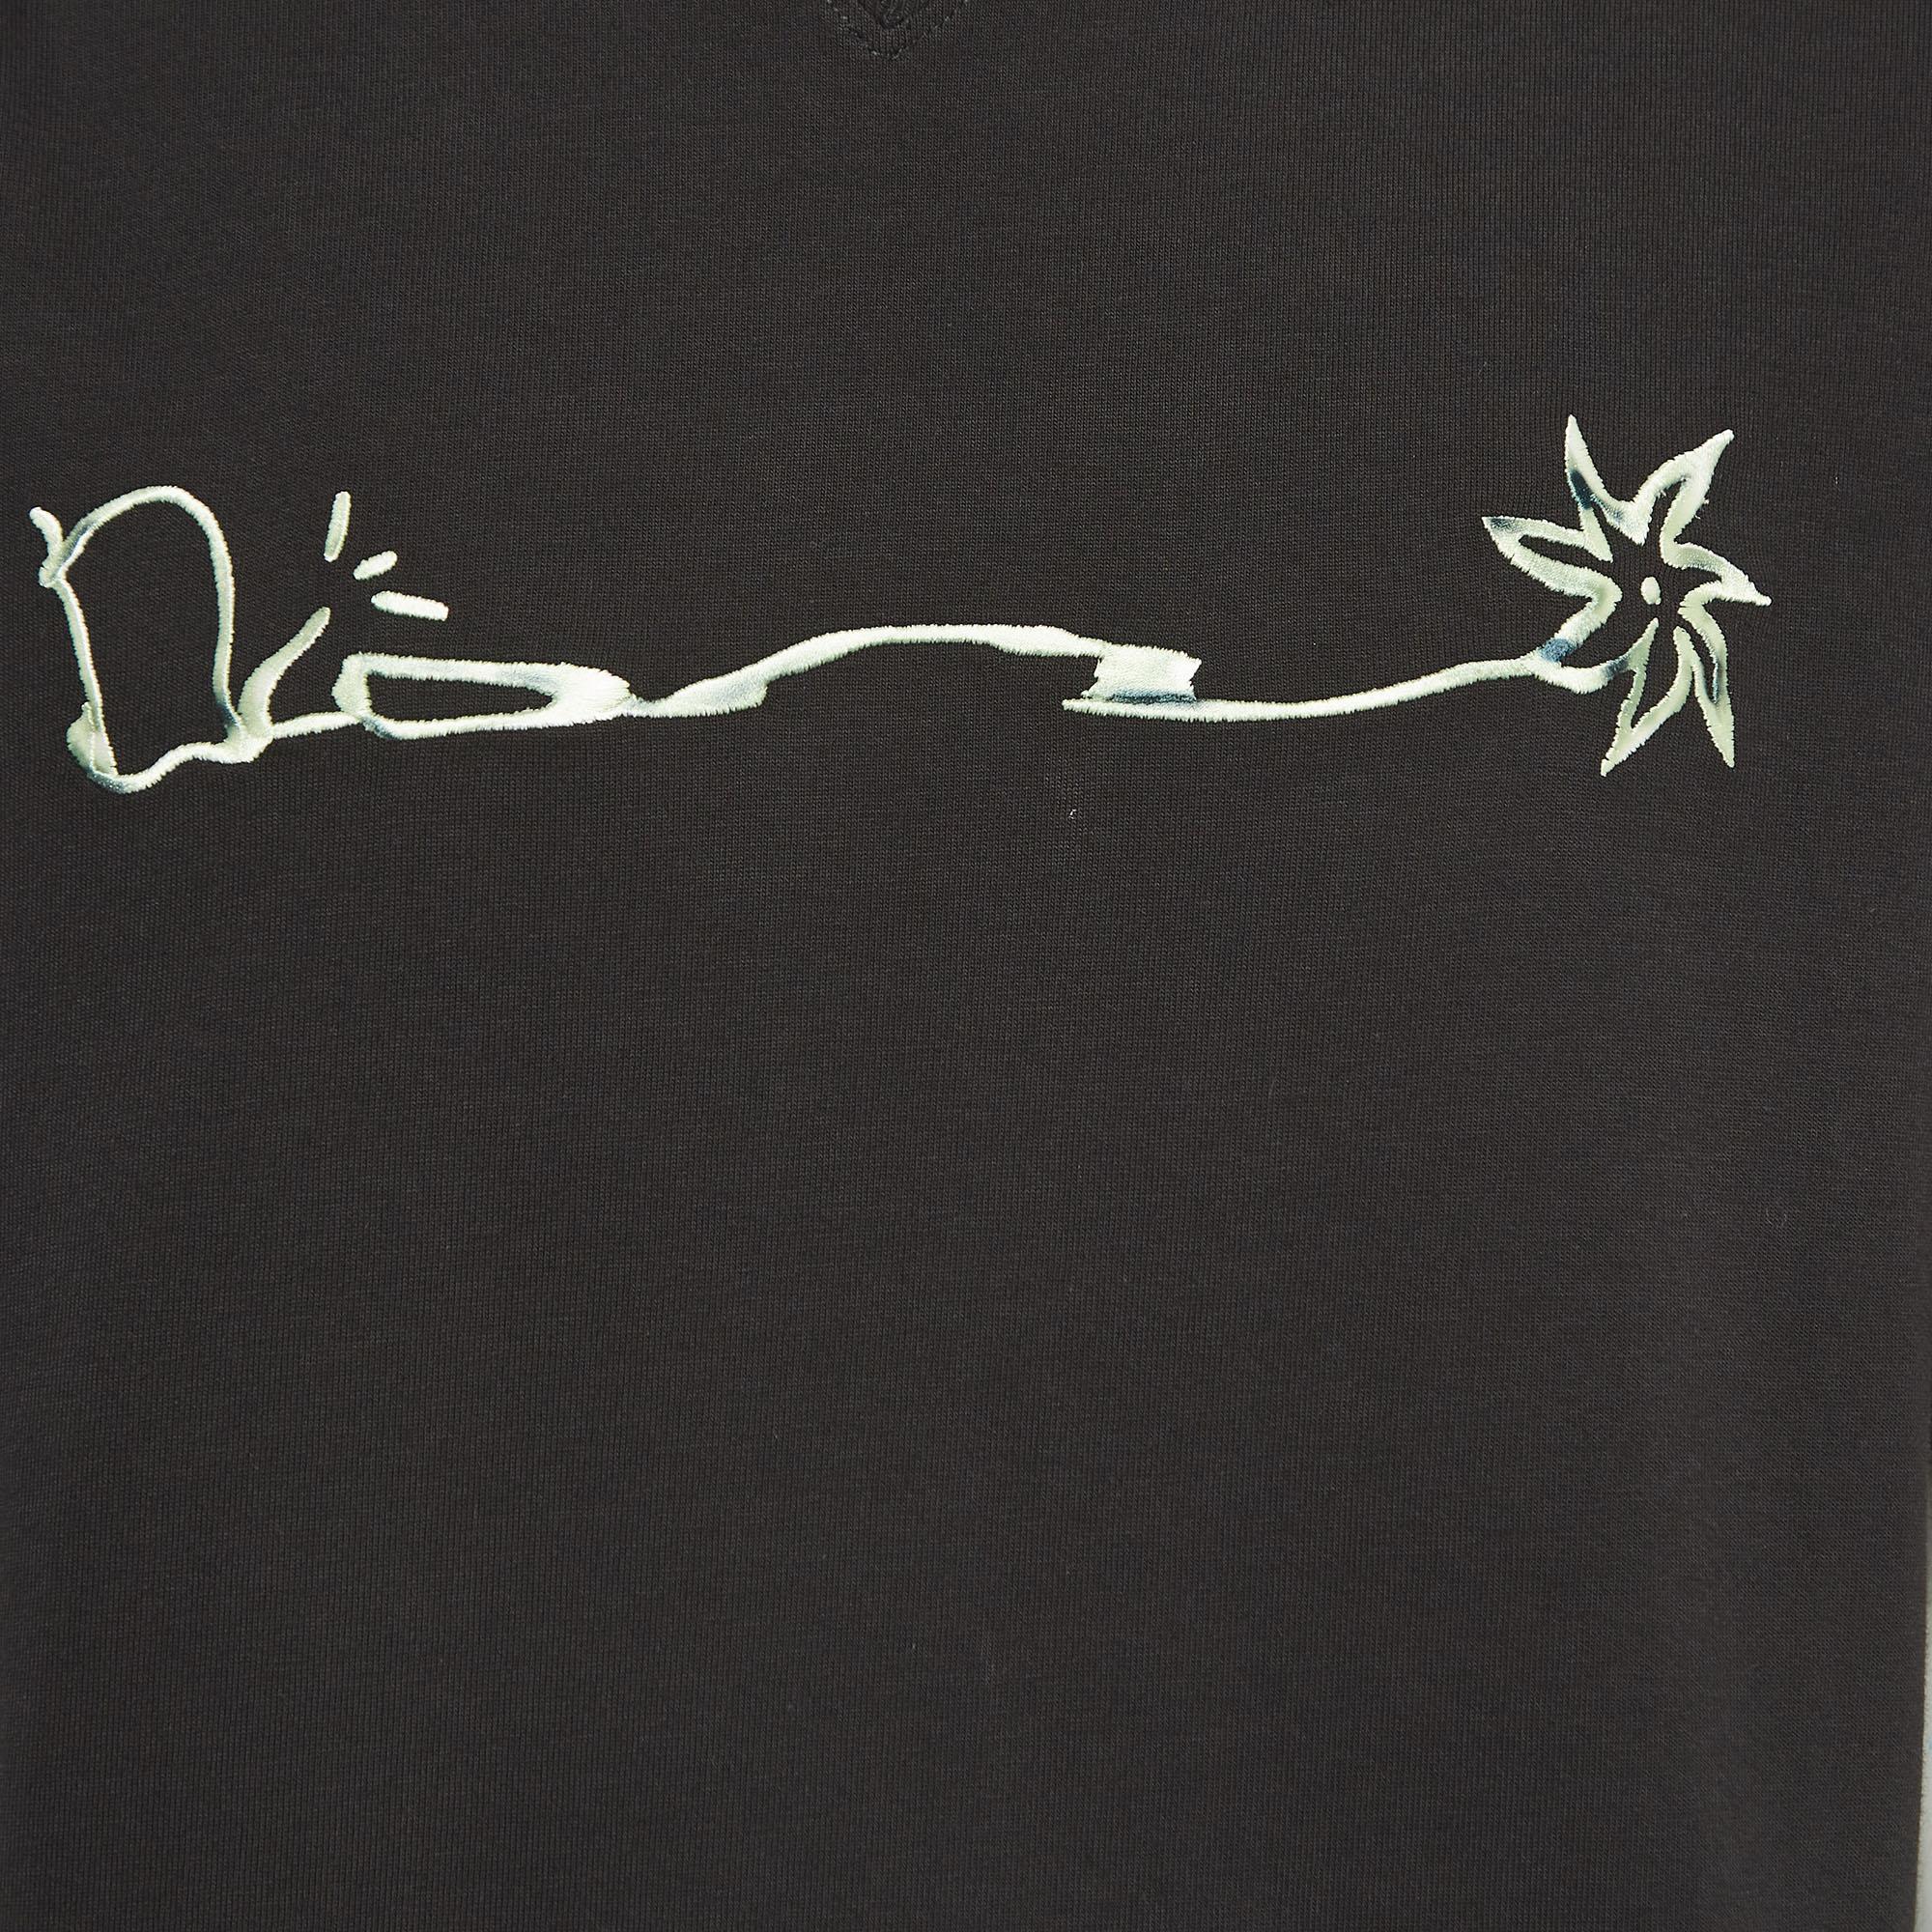 Dior Homme X Cactus Jack Black Embroidered Cotton Oversized T-Shirt M In Excellent Condition For Sale In Dubai, Al Qouz 2